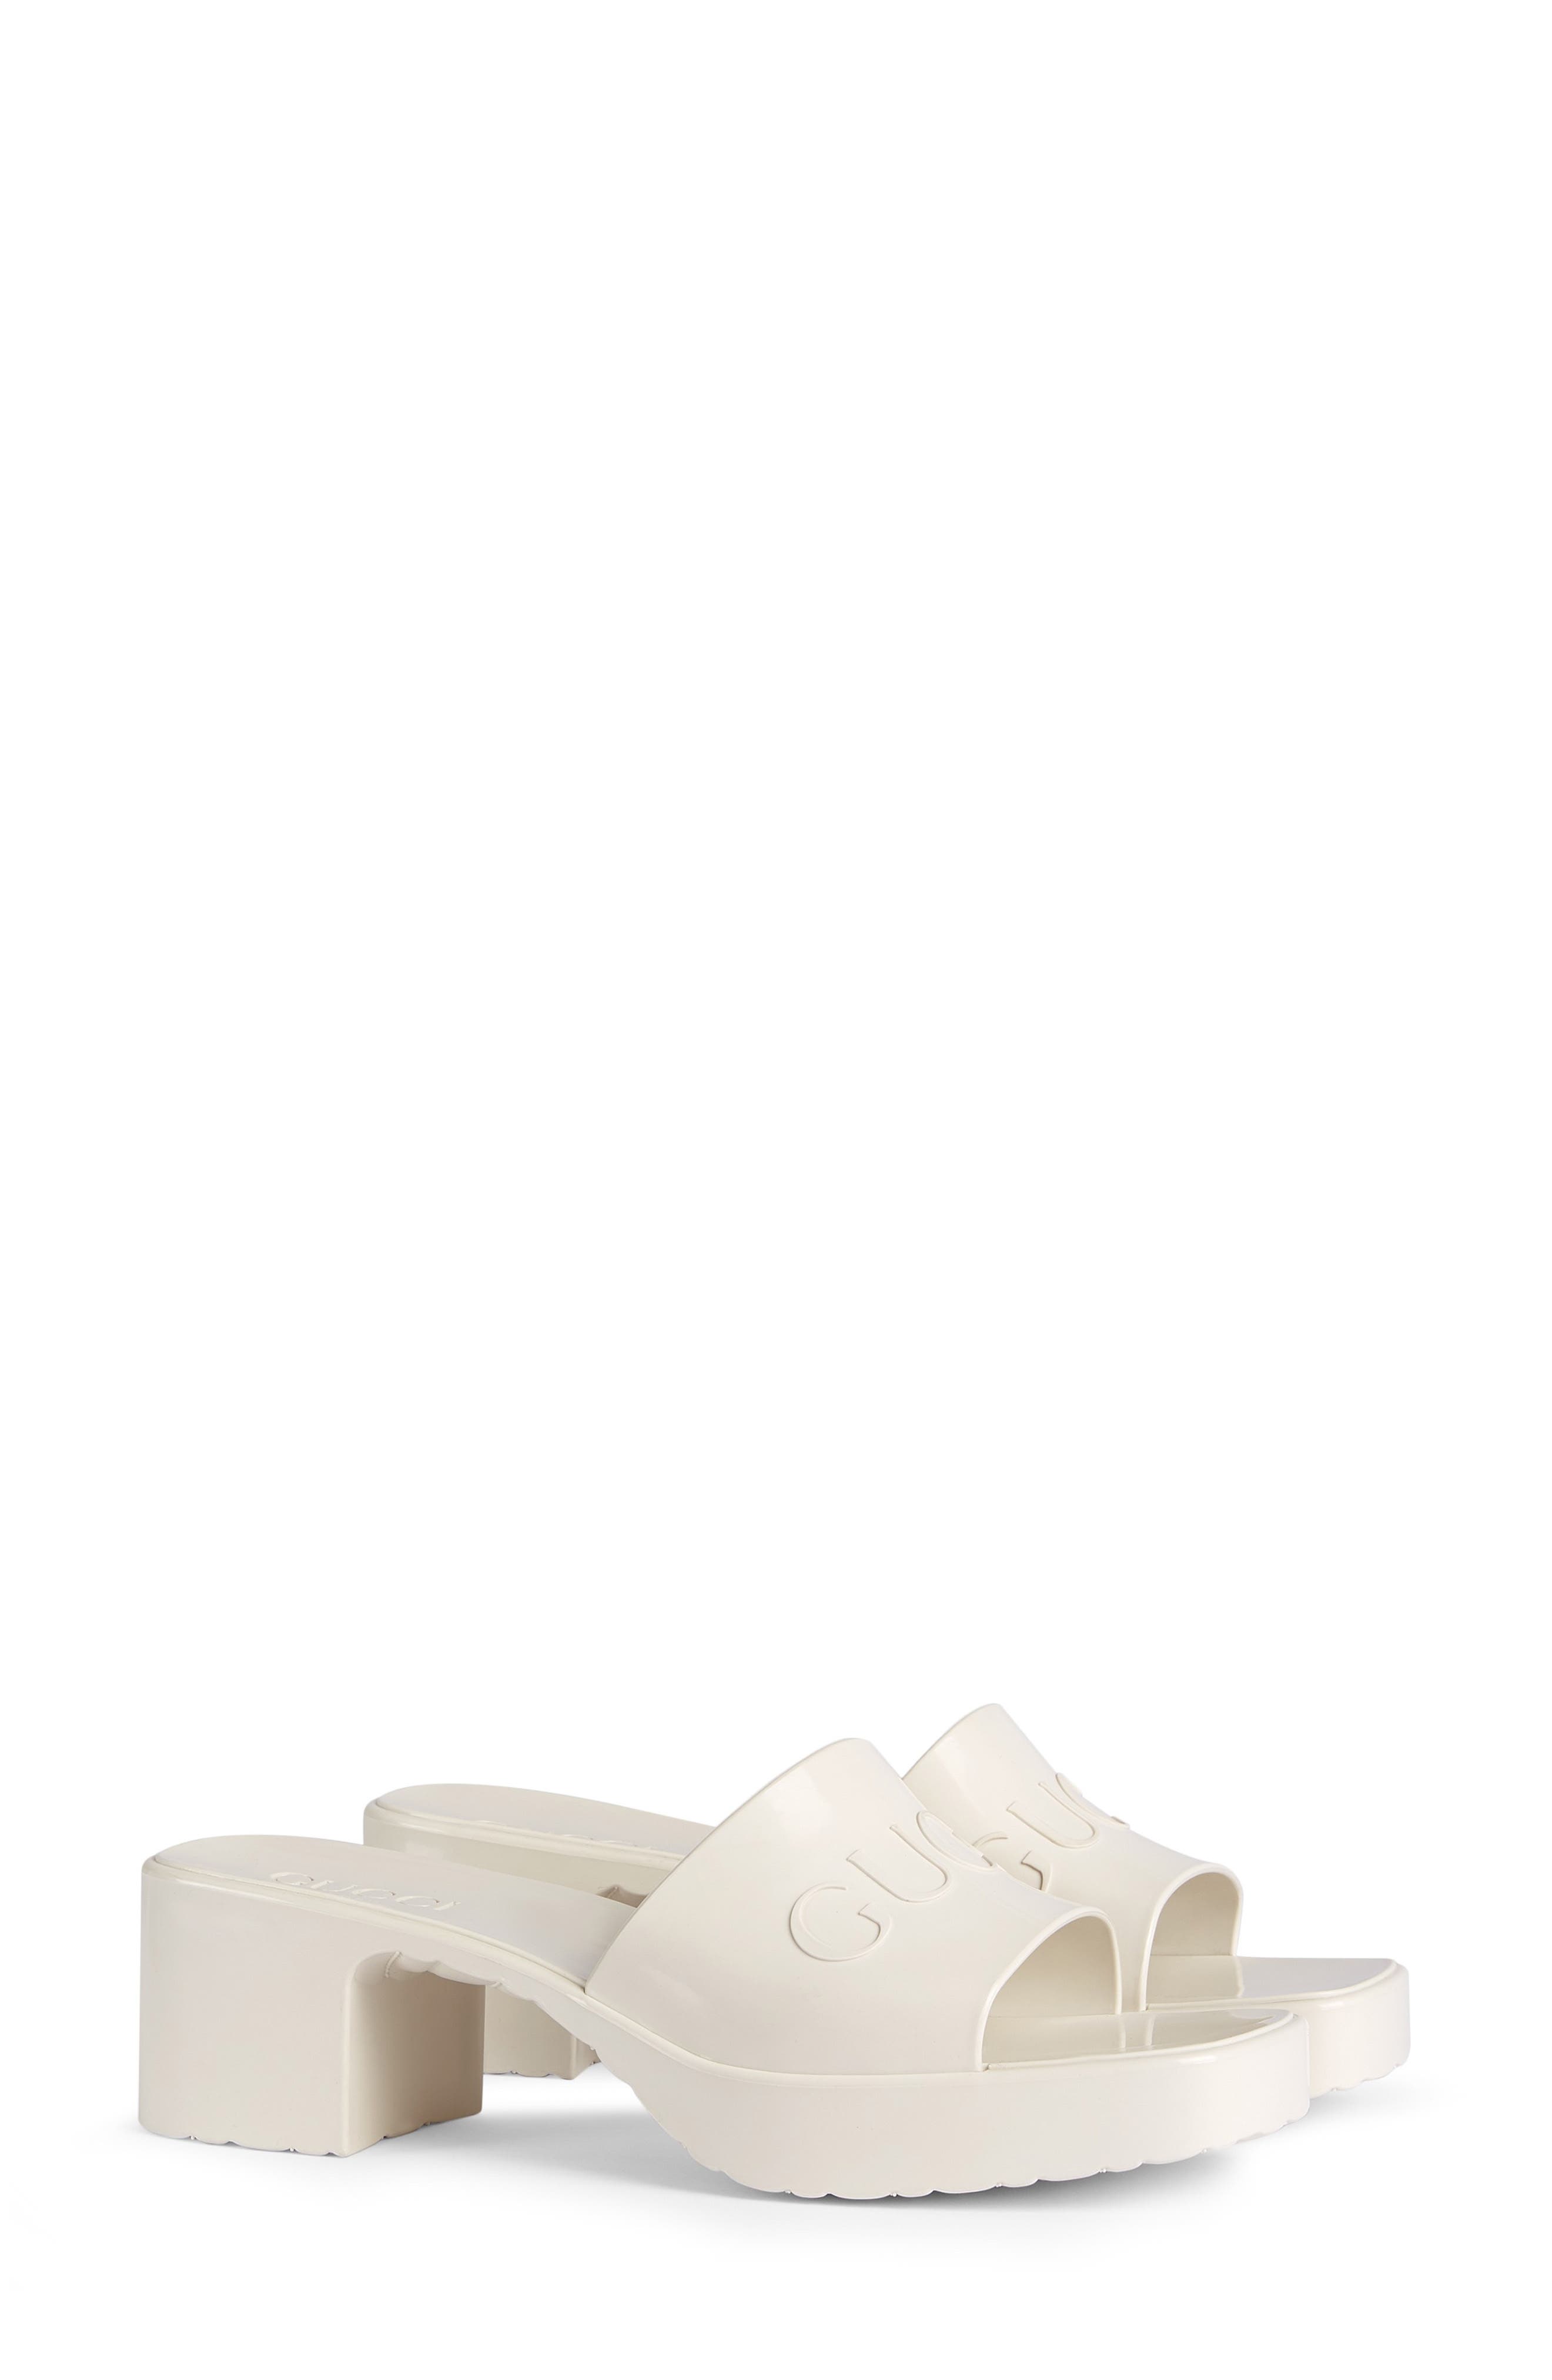 white designer sandals